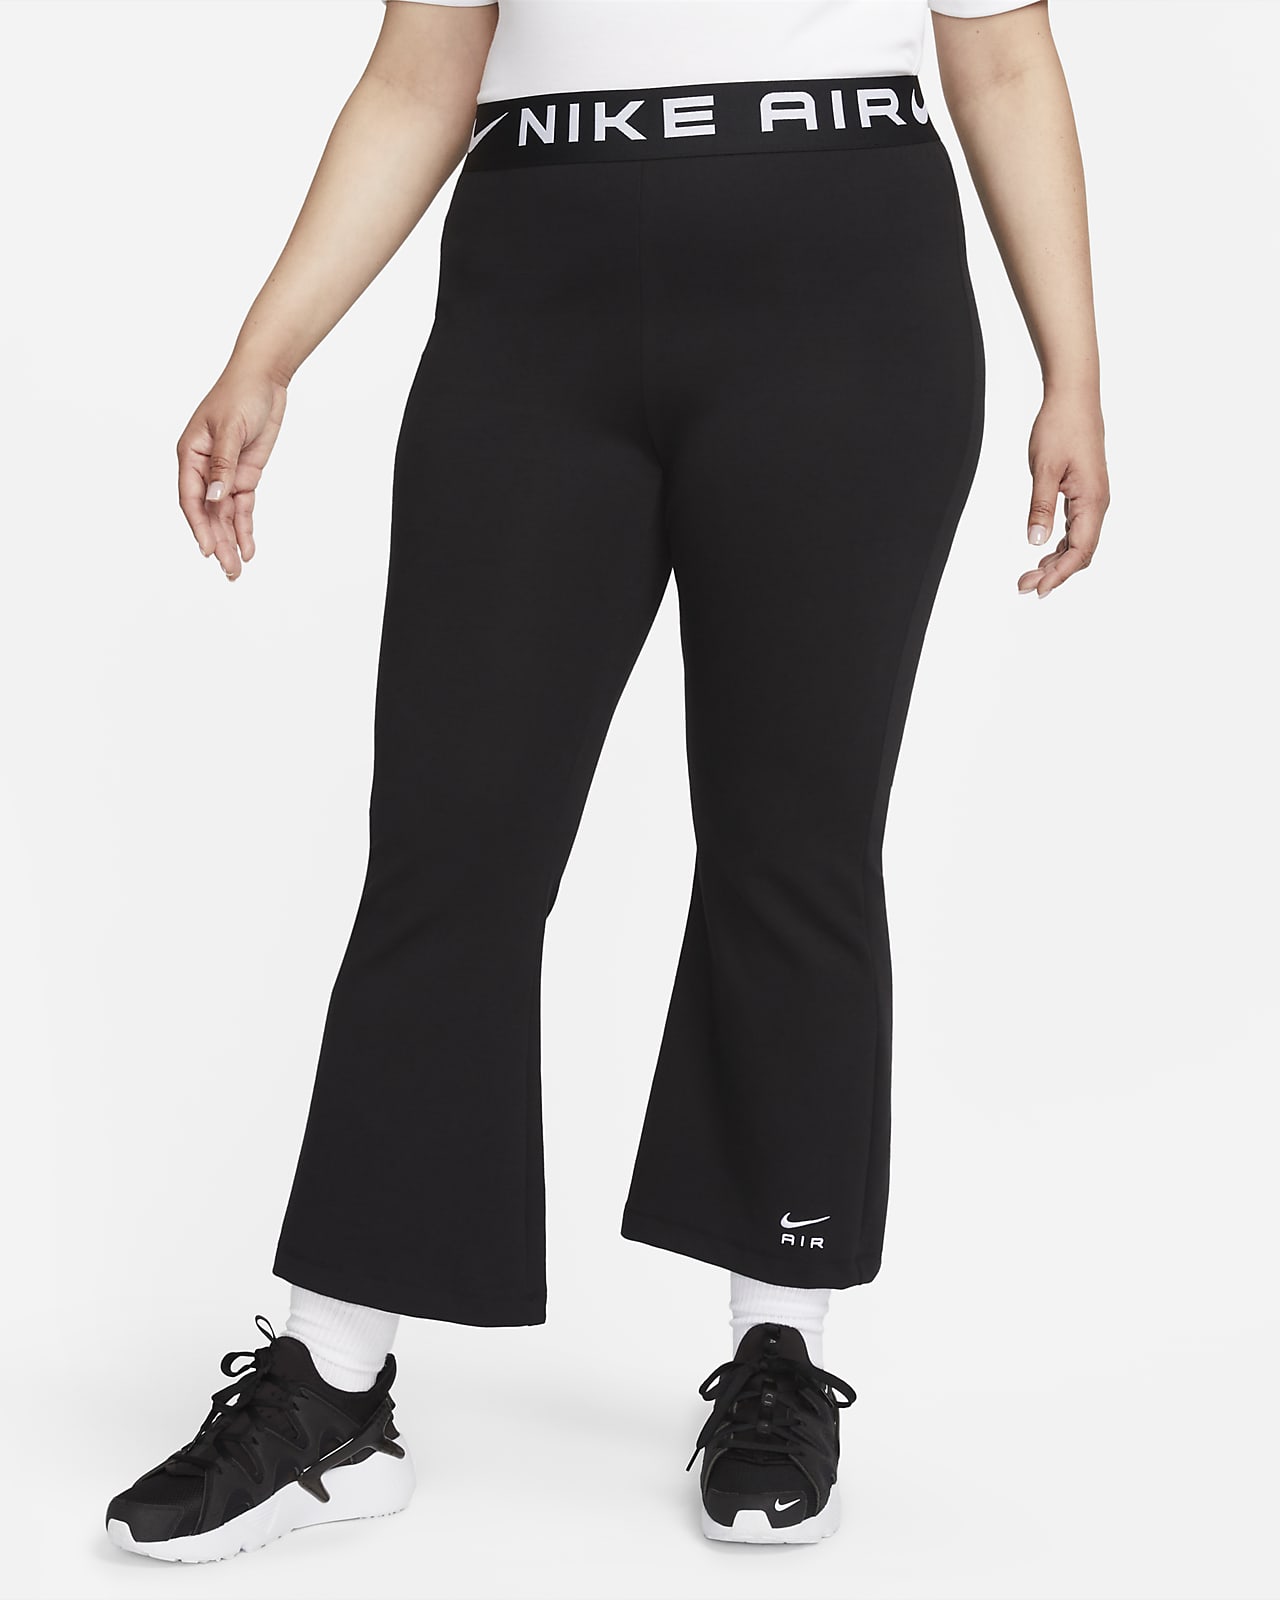 Nike Sportswear Air Women's High-Rise Leggings (Plus Size). Nike LU